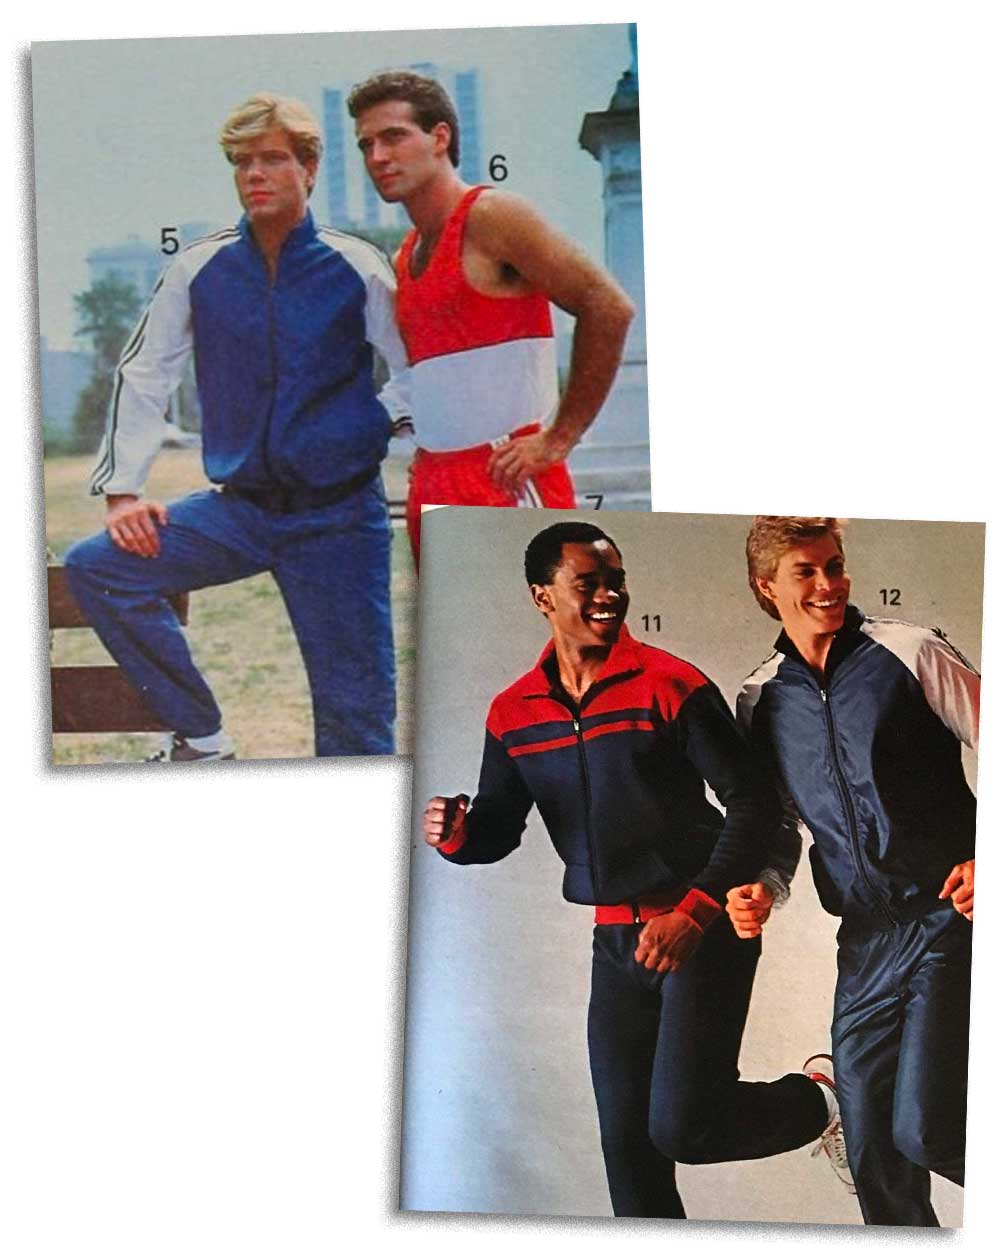 Athletic Wear for boys in 80s fashion